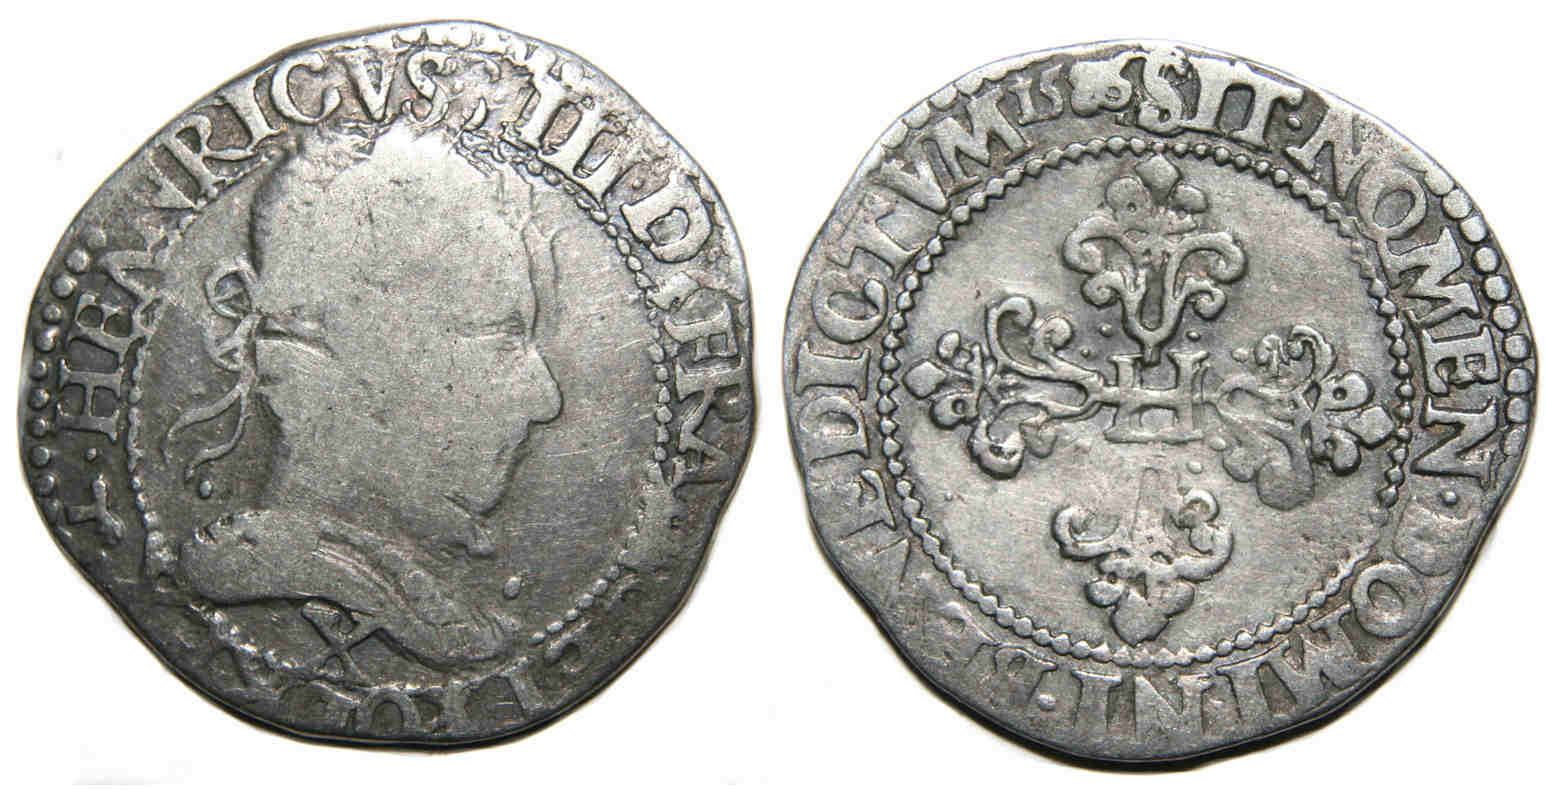 Monnaies royales franciases-HENRI III-demi franc-1586-AMIENS